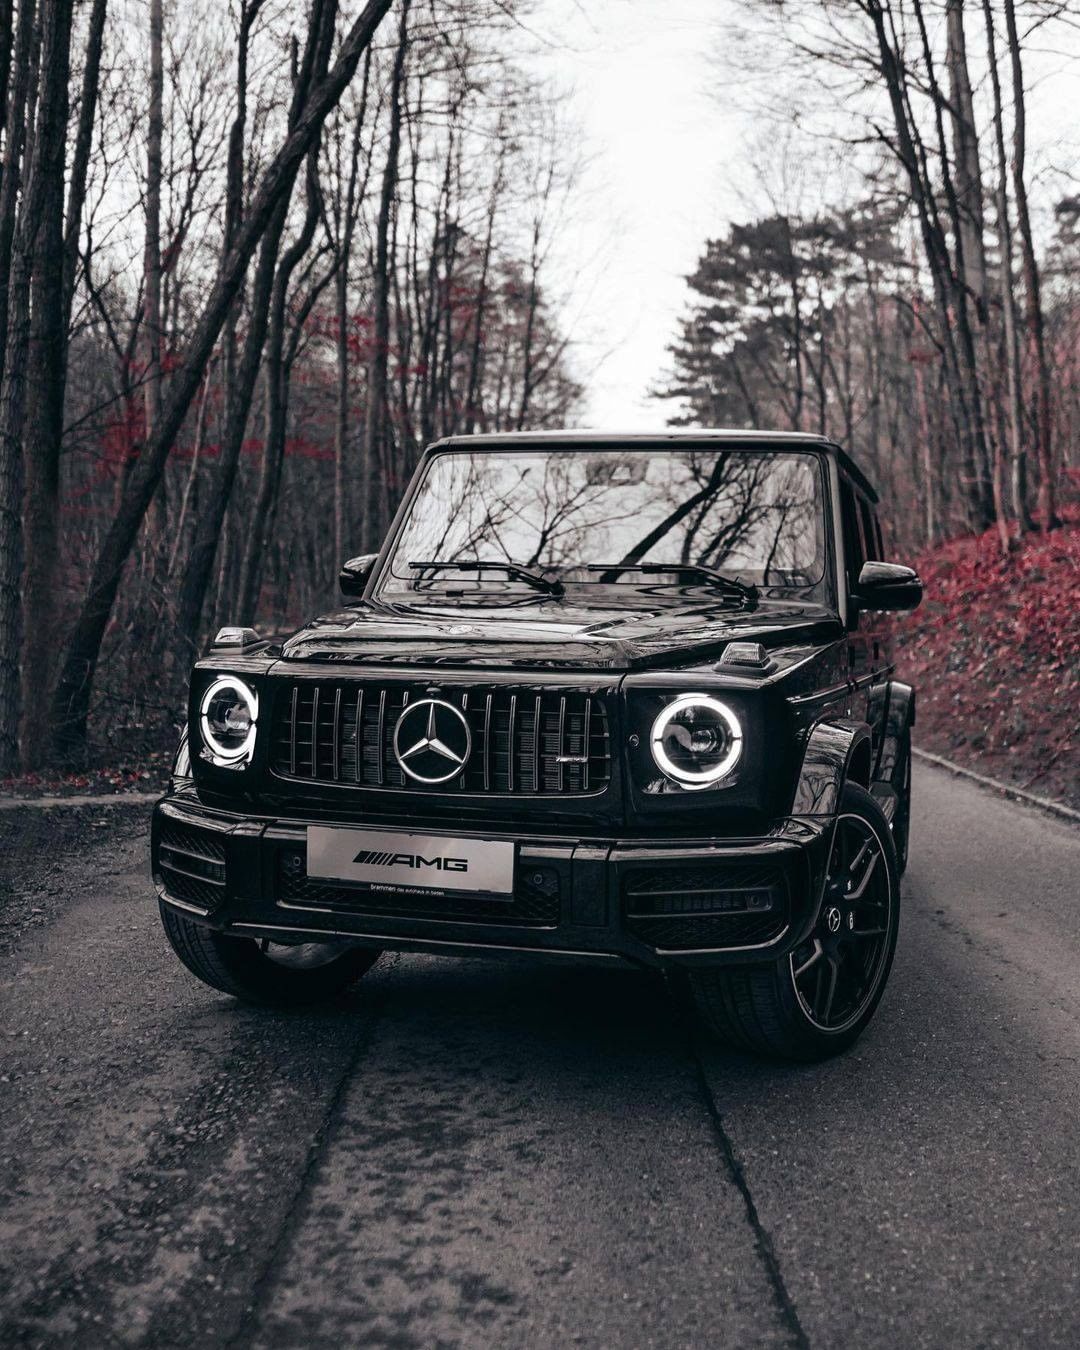 SpeedofGermany On Instagram: “Mercedes AMG G 63